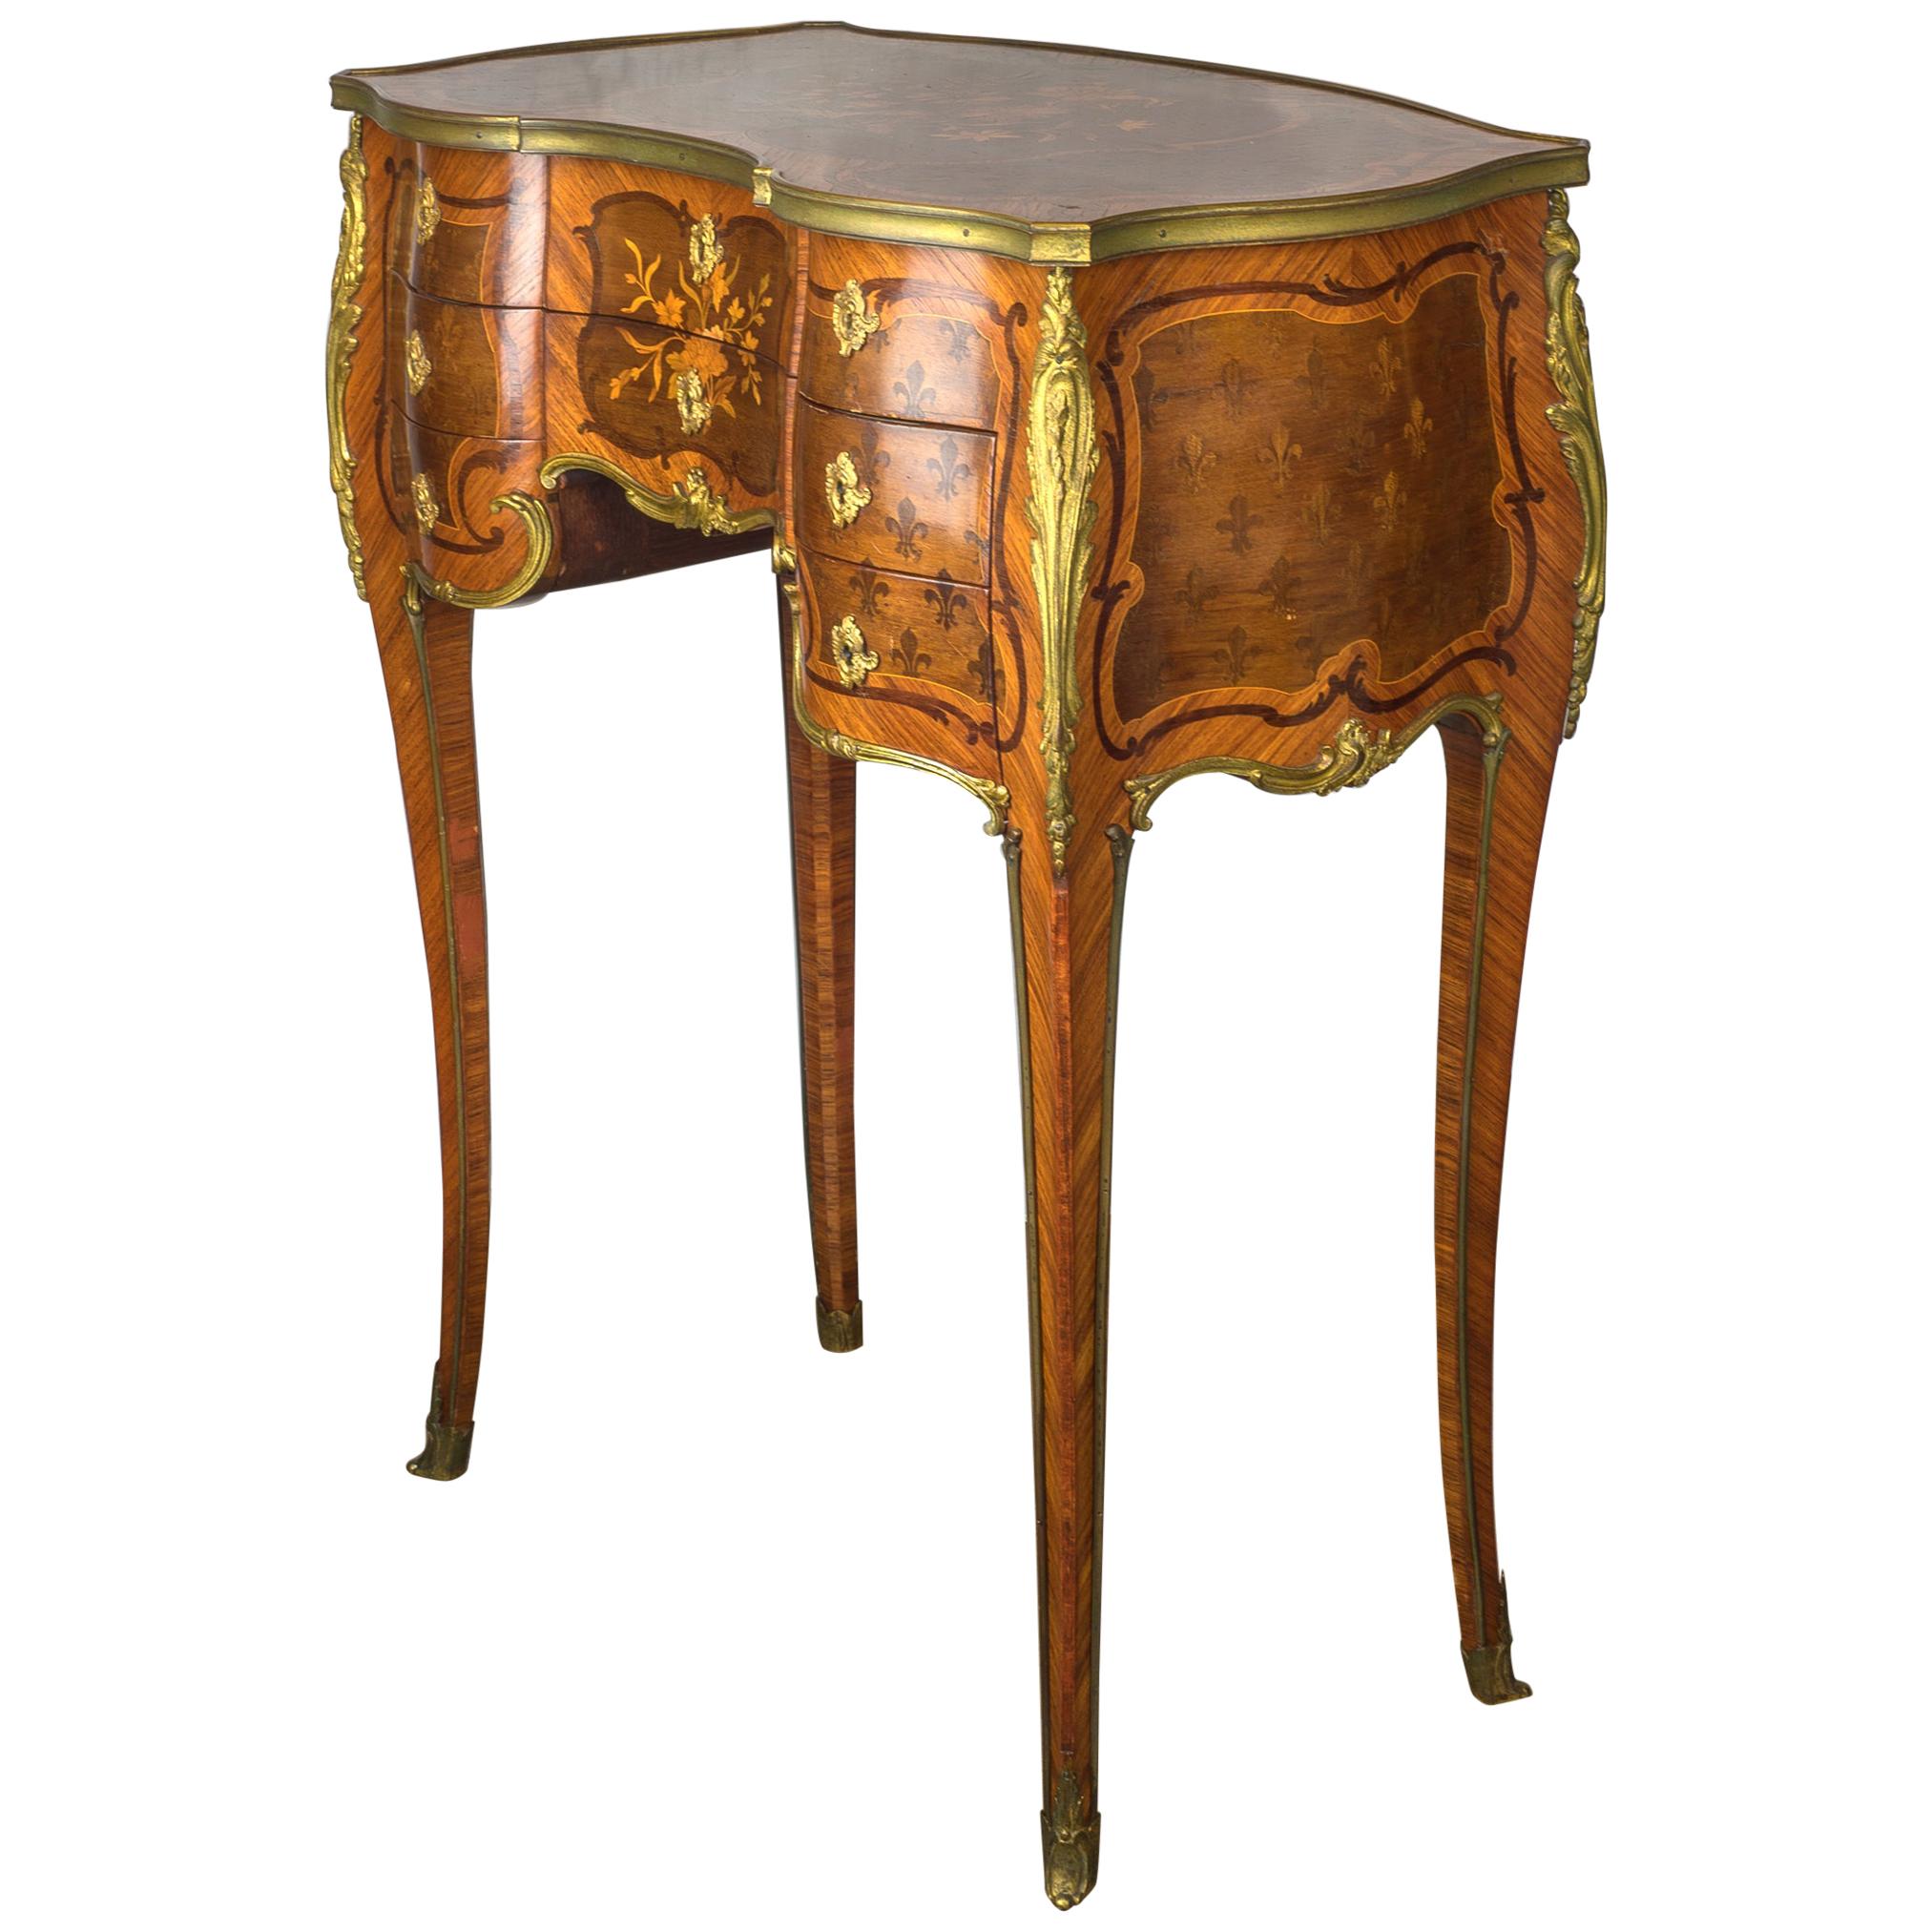 French Kingwood and Mahogany-Veneered Ormolu-Mounted Dressing Table